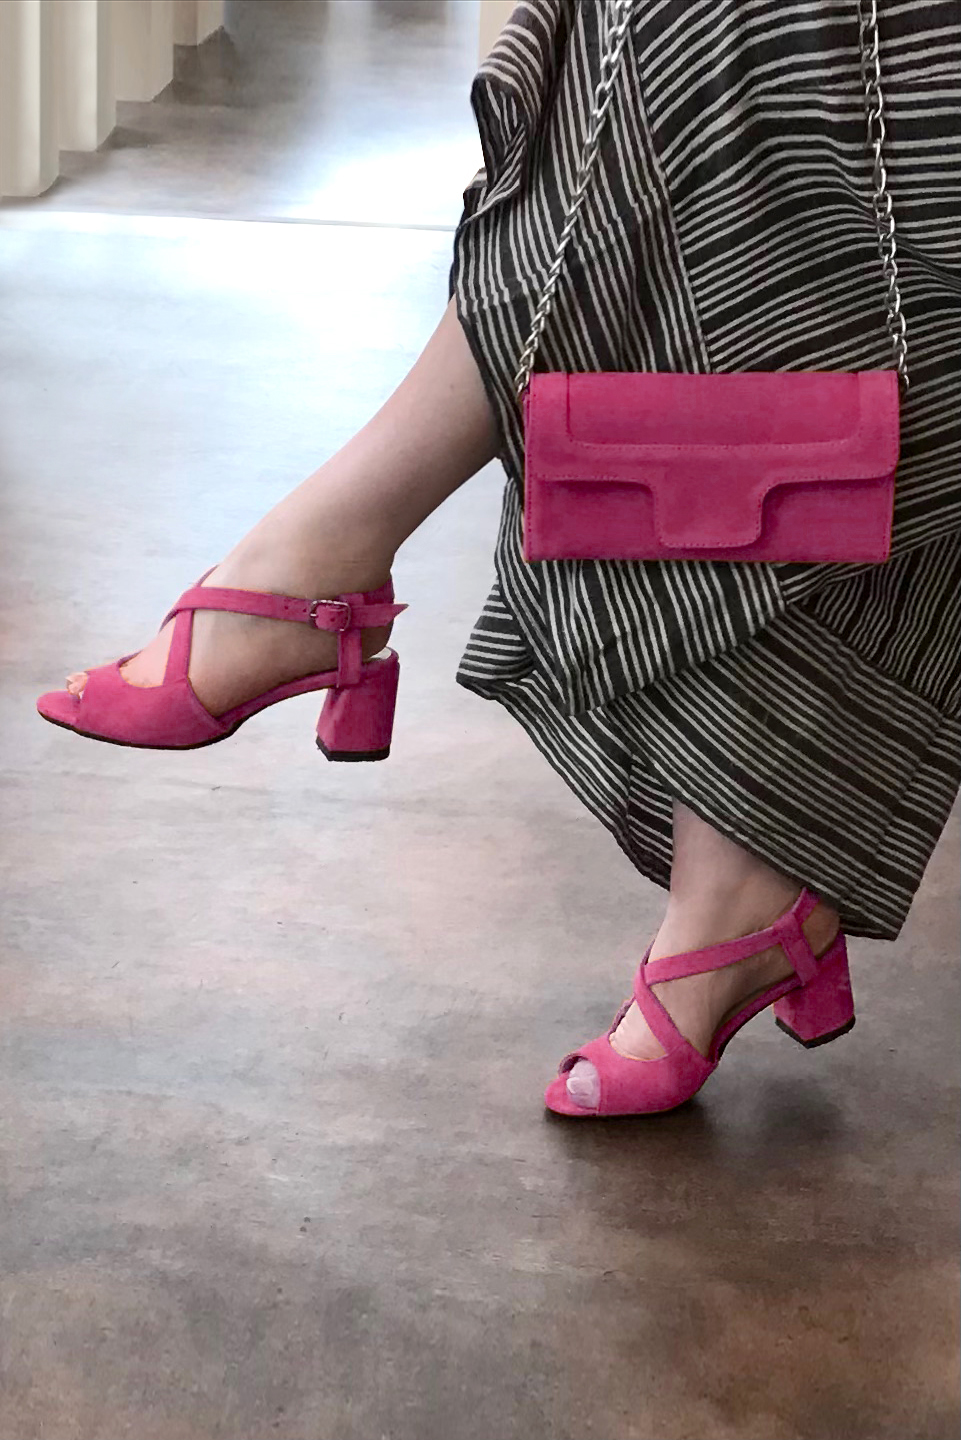 Sandales et ceinture assorties couleur rose fuchsia - Florence KOOIJMAN